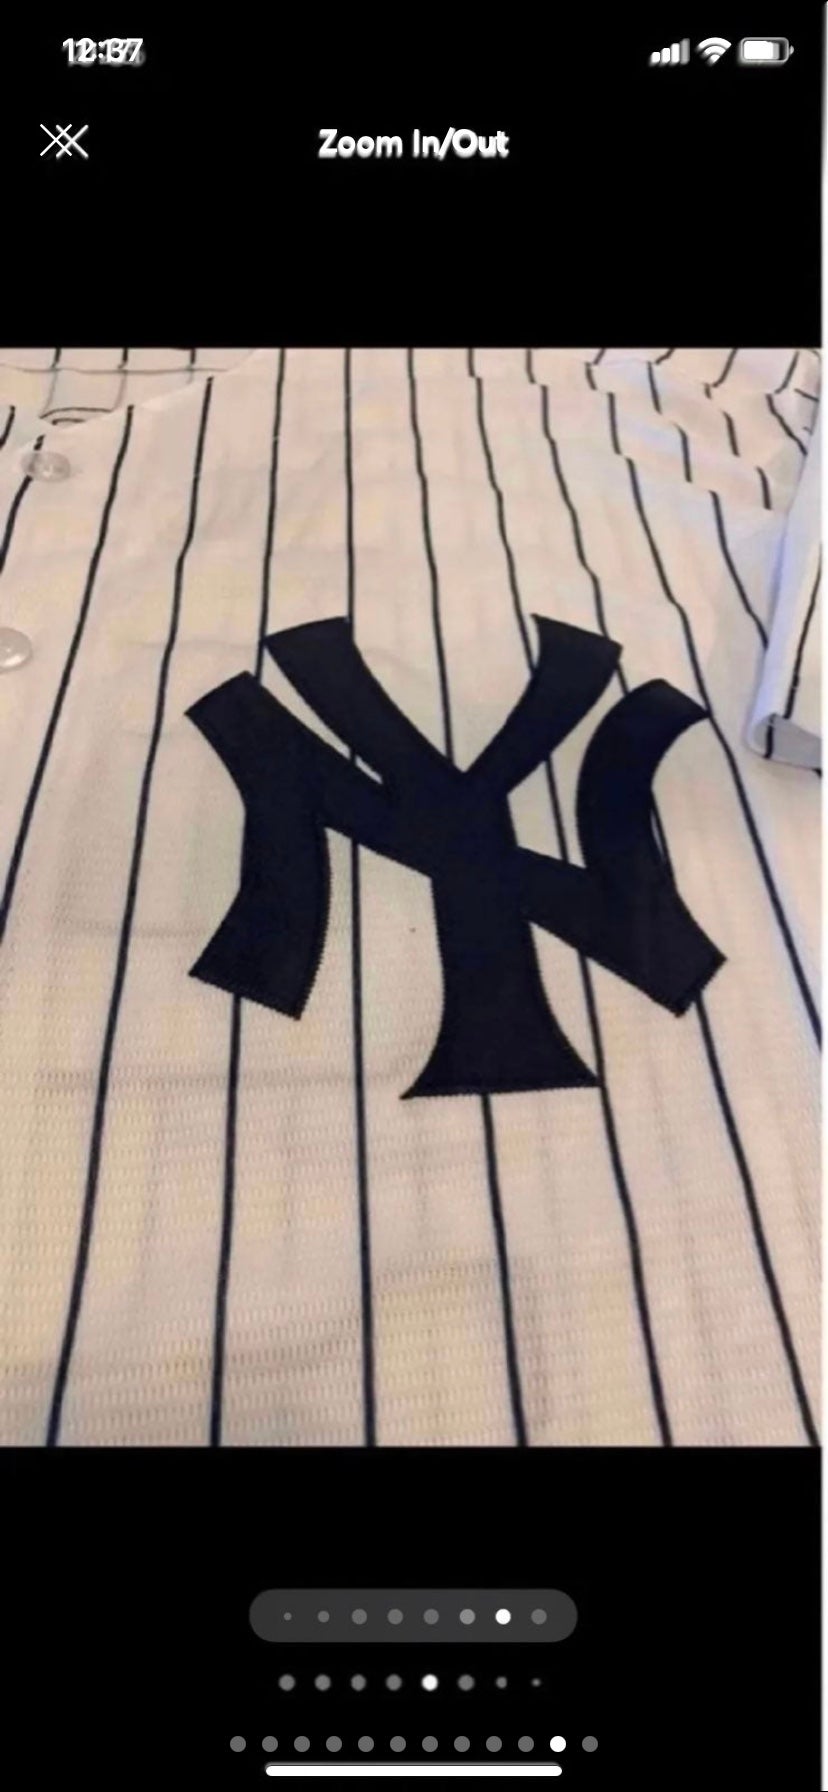 Judge Yankees Adult jersey size XL Bundle Of 2